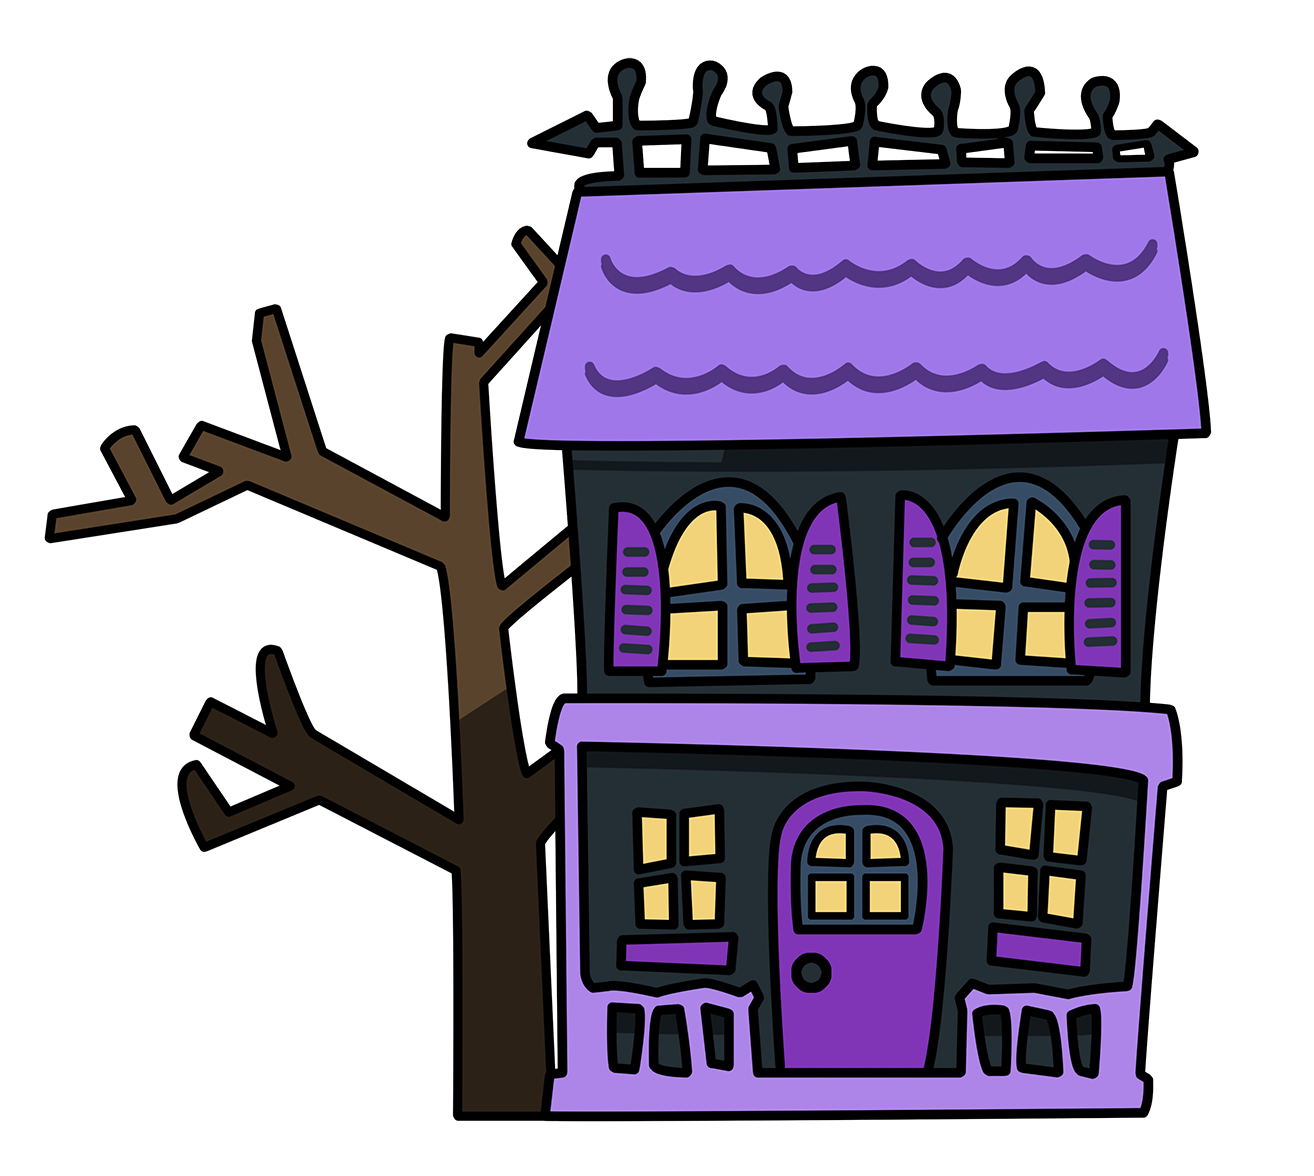 Cute Cartoon Houses - ClipArt Best